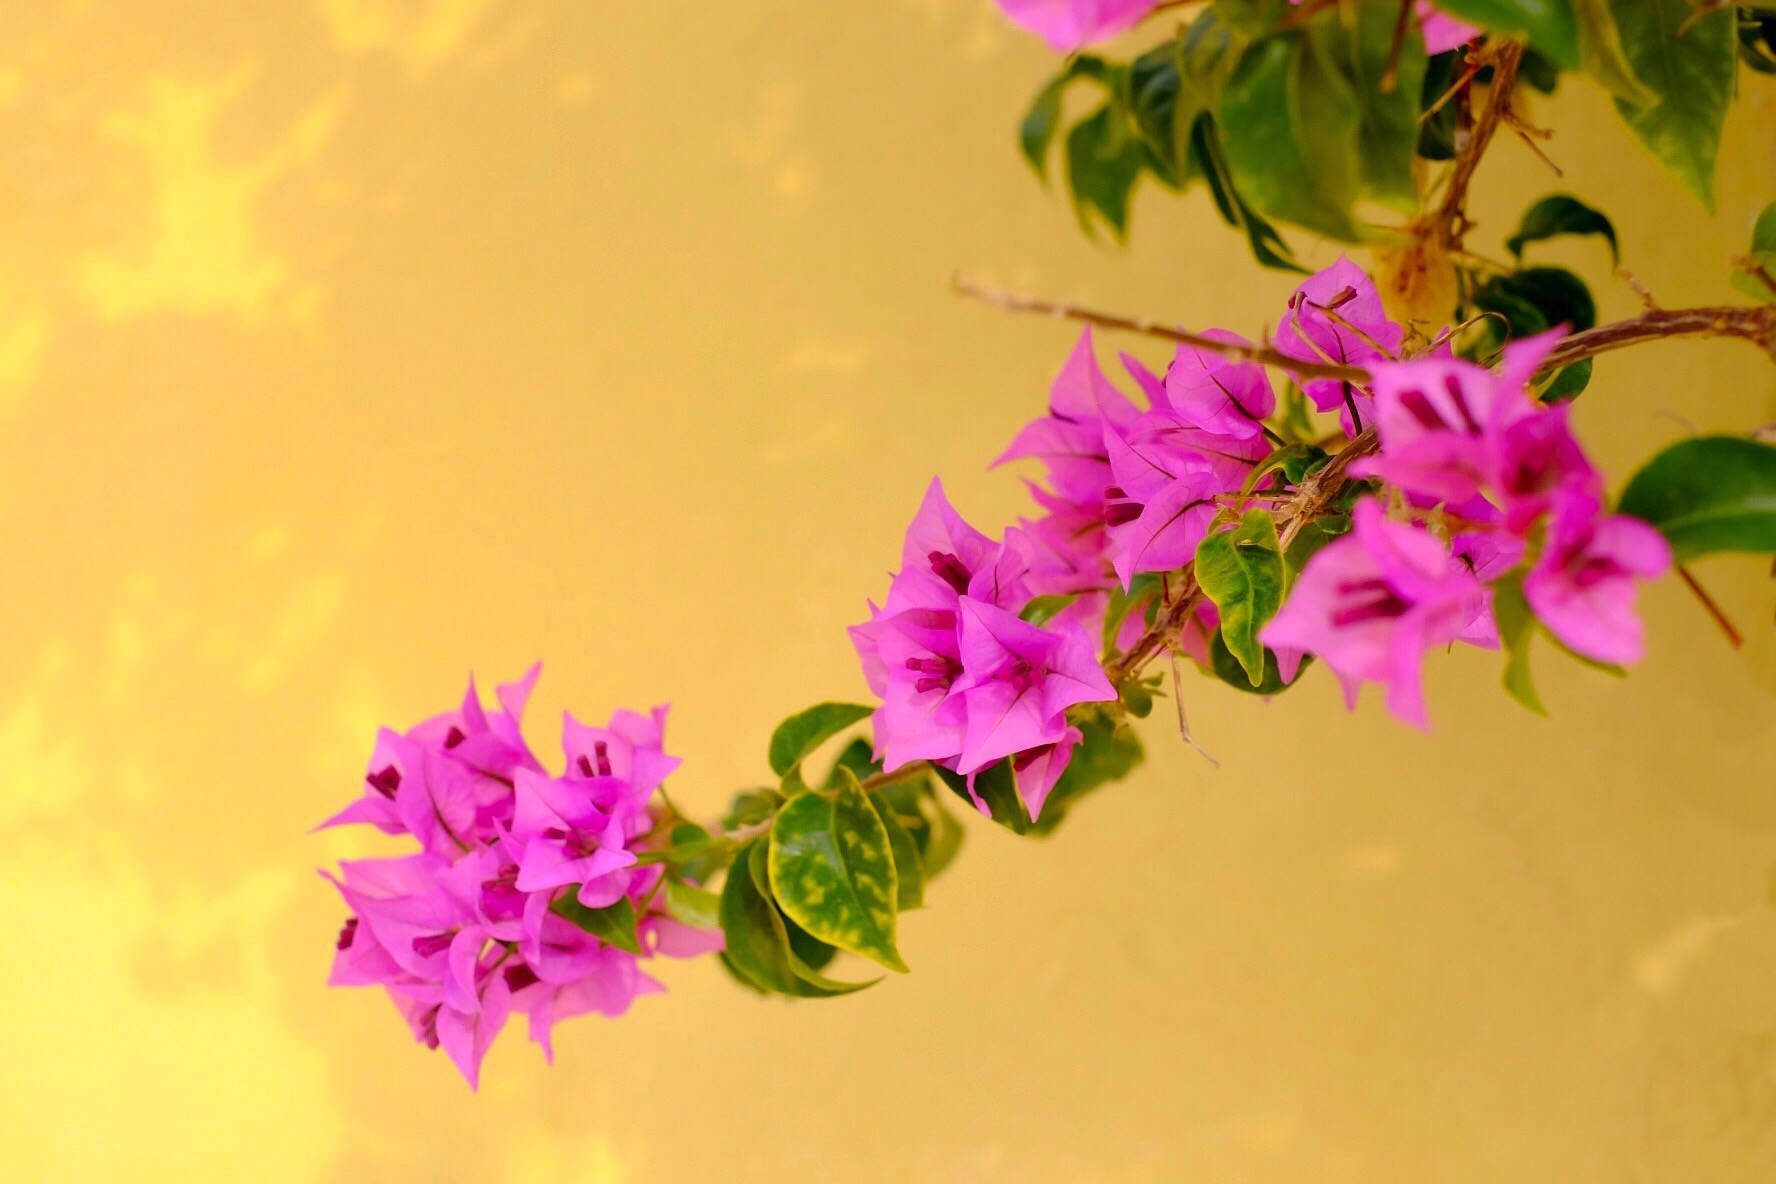 Caption: Vibrant Bougainvillea Blooms Adorning A Garden Path